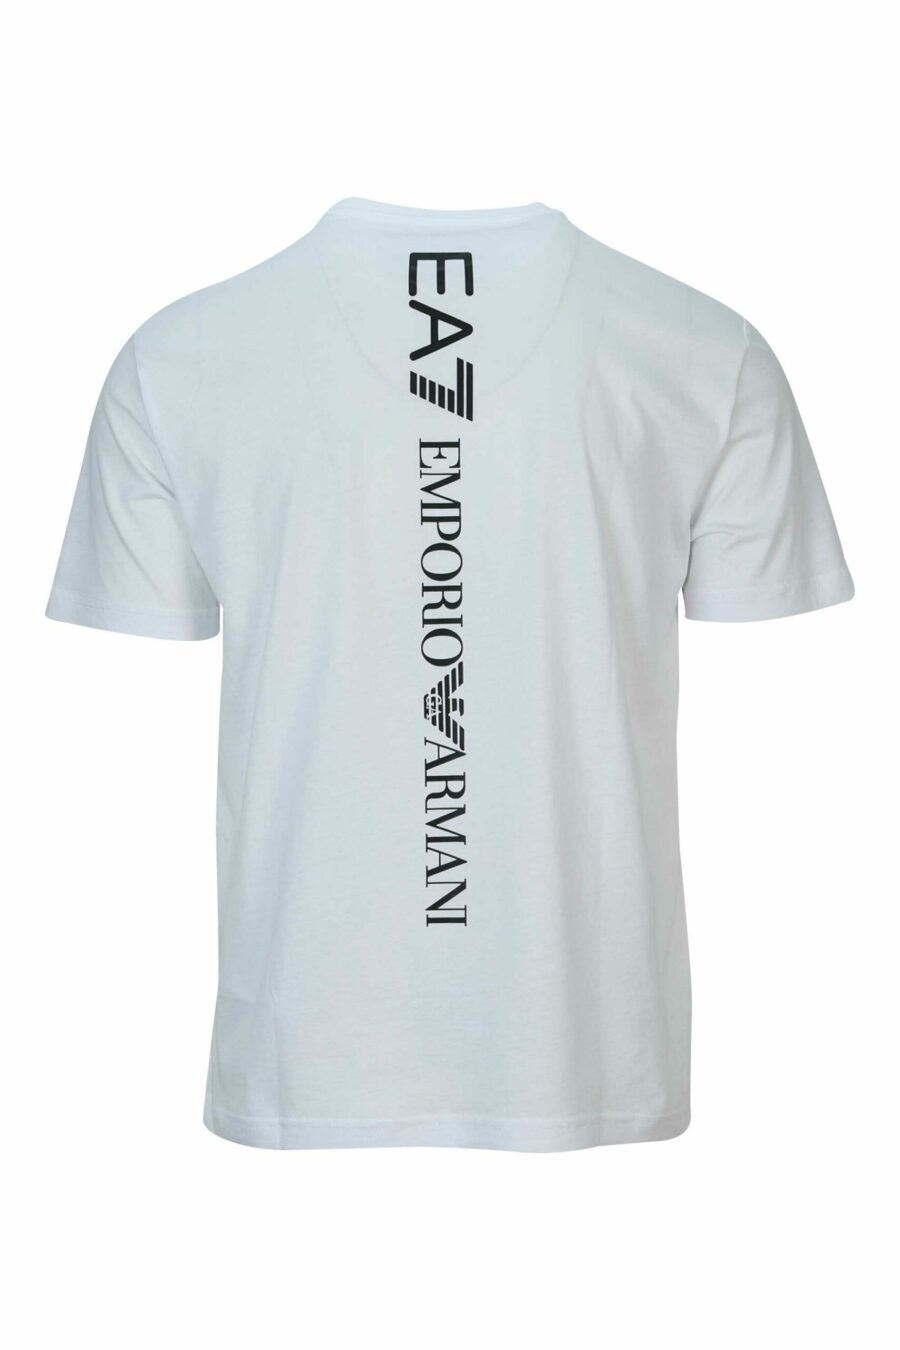 T-shirt blanc avec maxilogo vertical "lux identity" au dos - 8058947452569 1 scaled